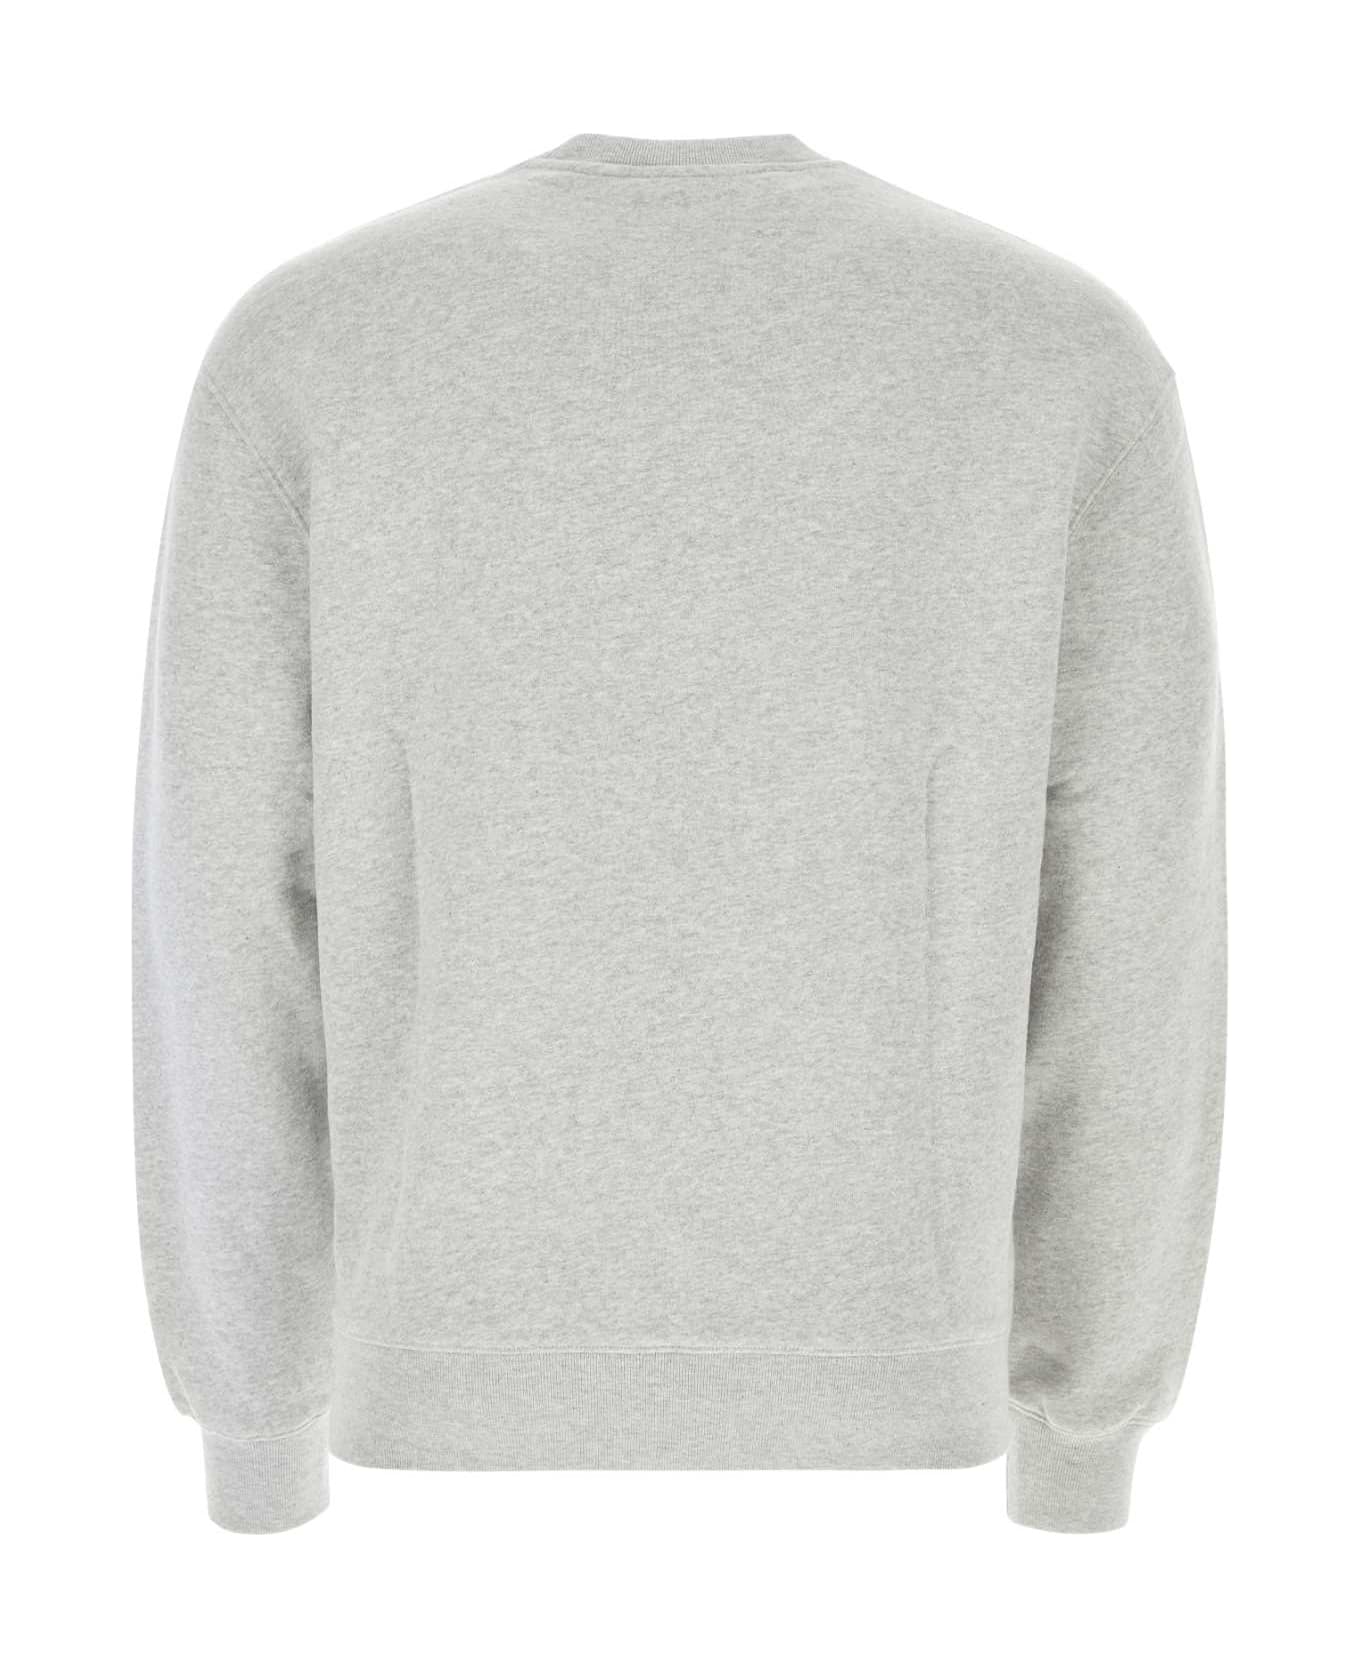 Maison Kitsuné Melange Grey Cotton Sweatshirt - LIGHT GREY MELANGE